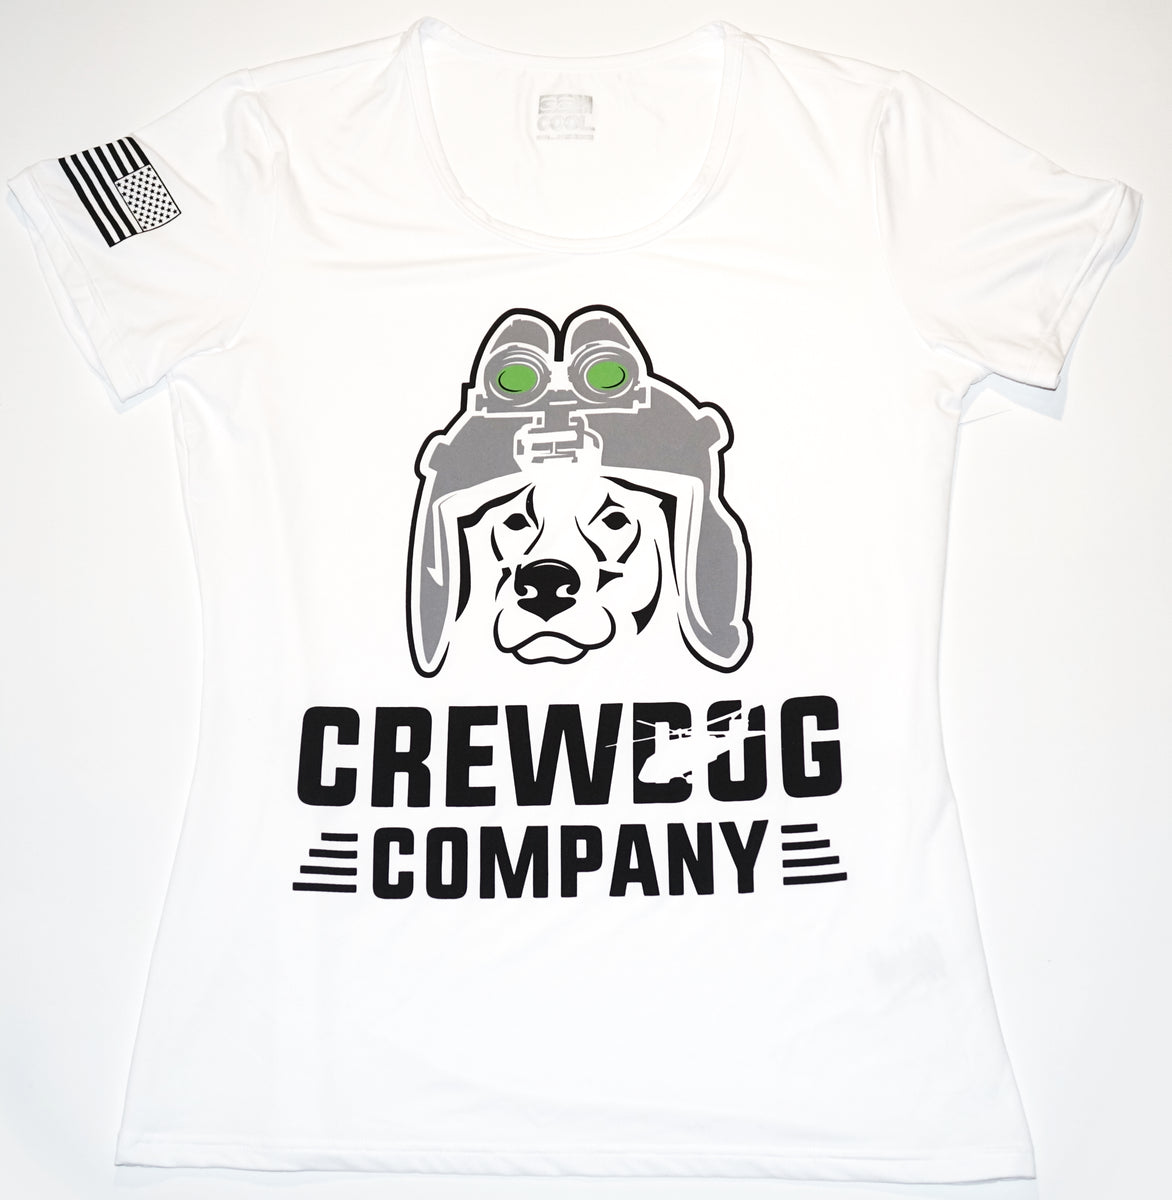 Crewdog Company Women's shirt